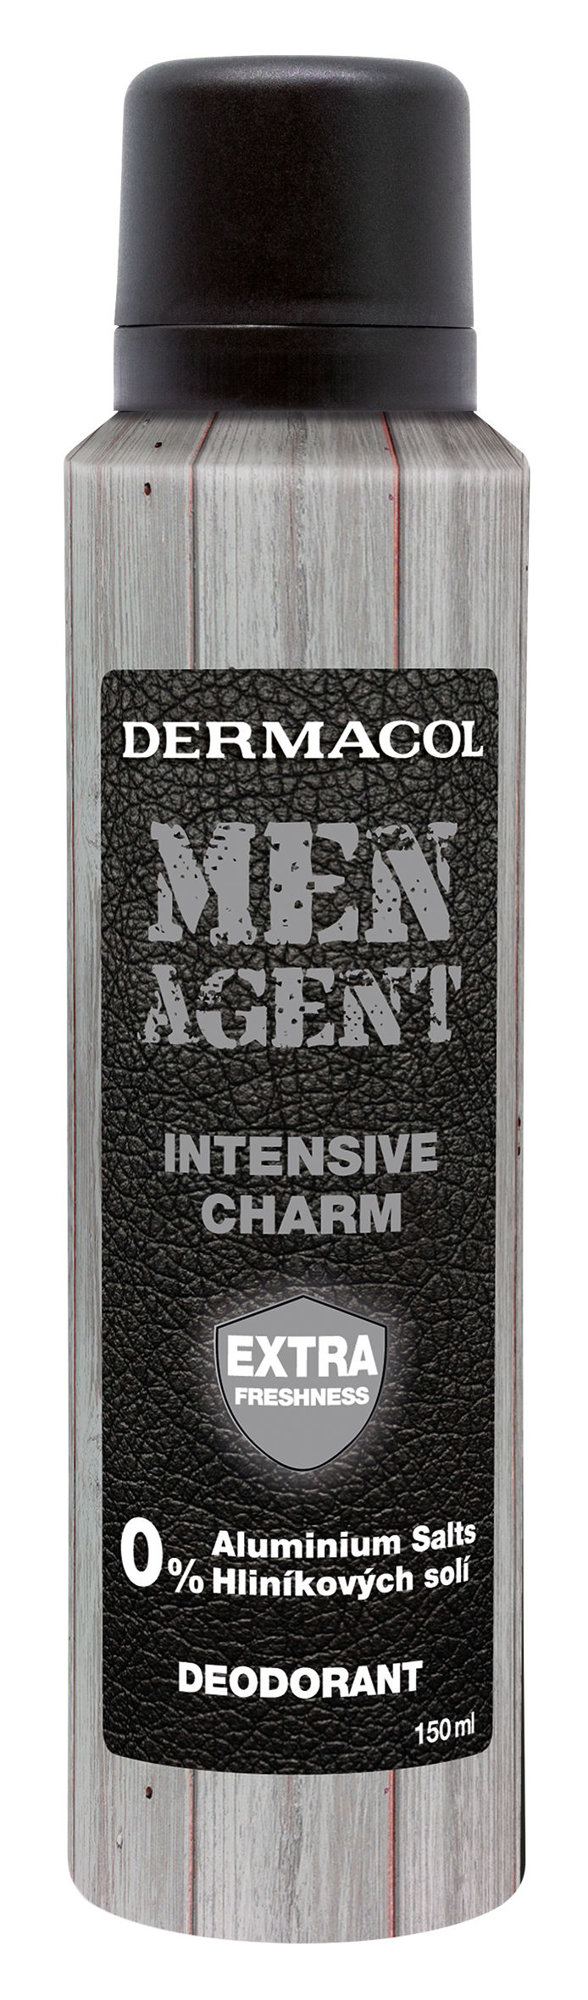 Dermacol Men Agent Intensive Charm dezodorantas